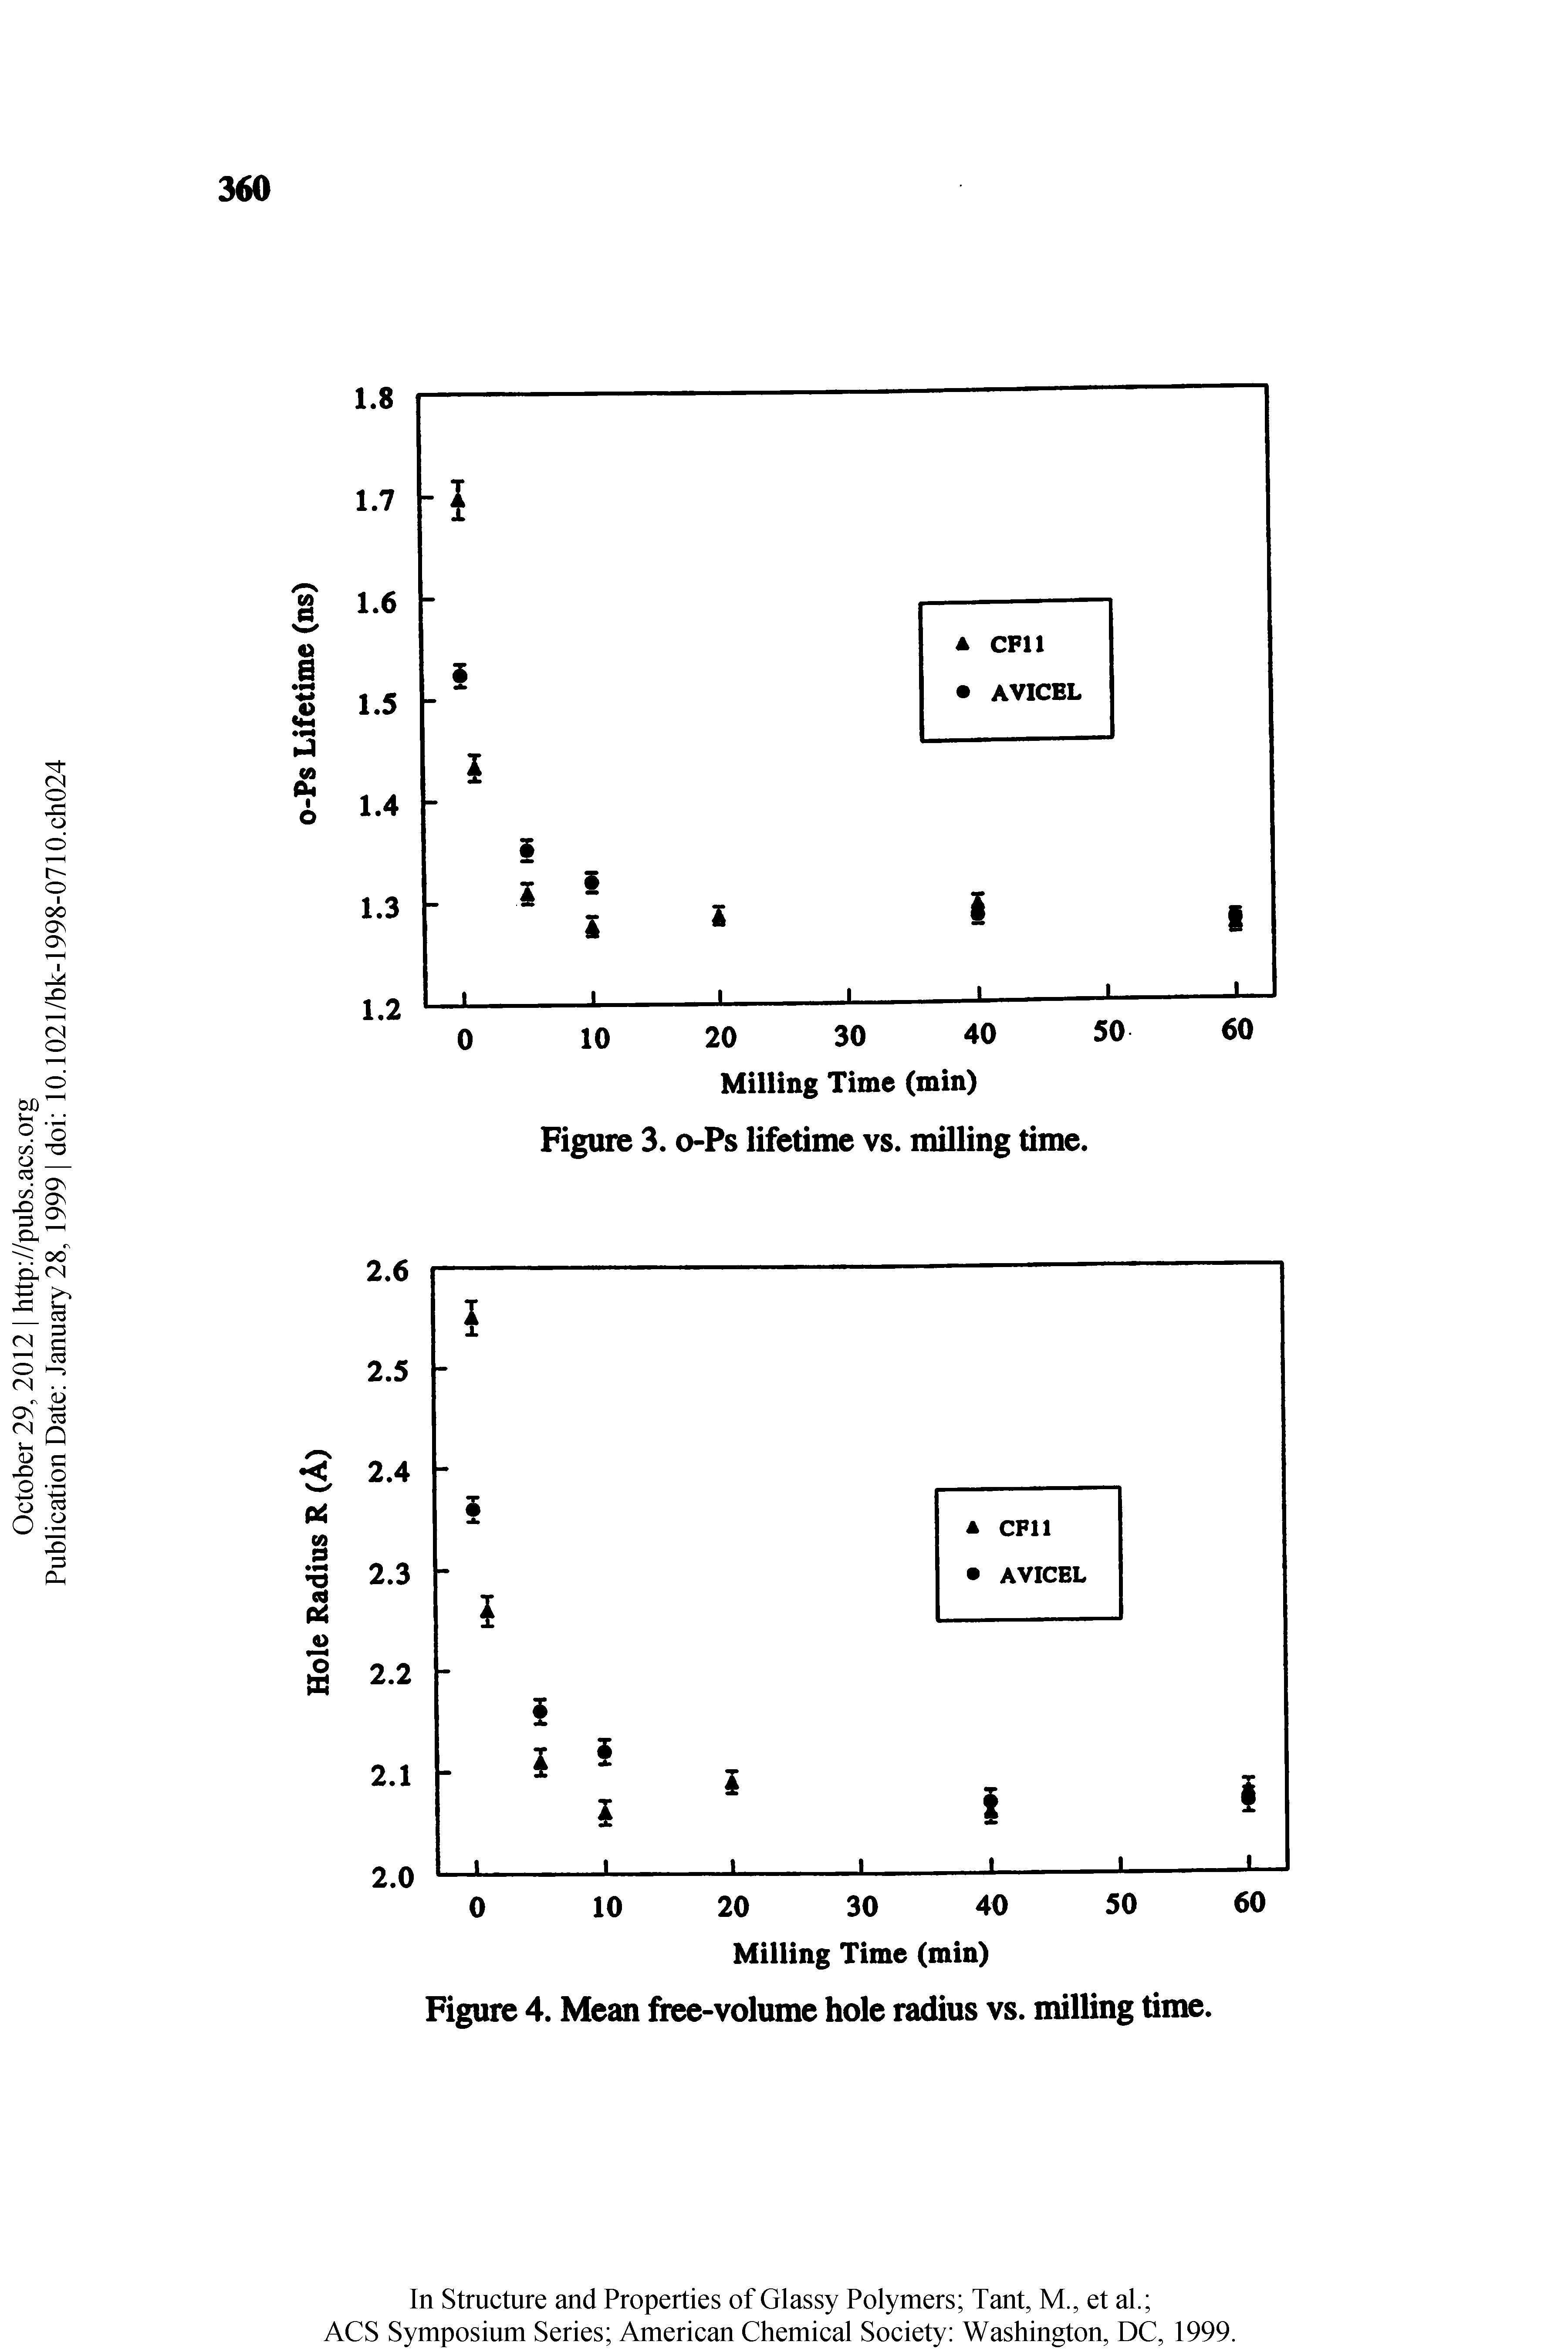 Figure 4. Mean free-volume hole radius vs. milling time.